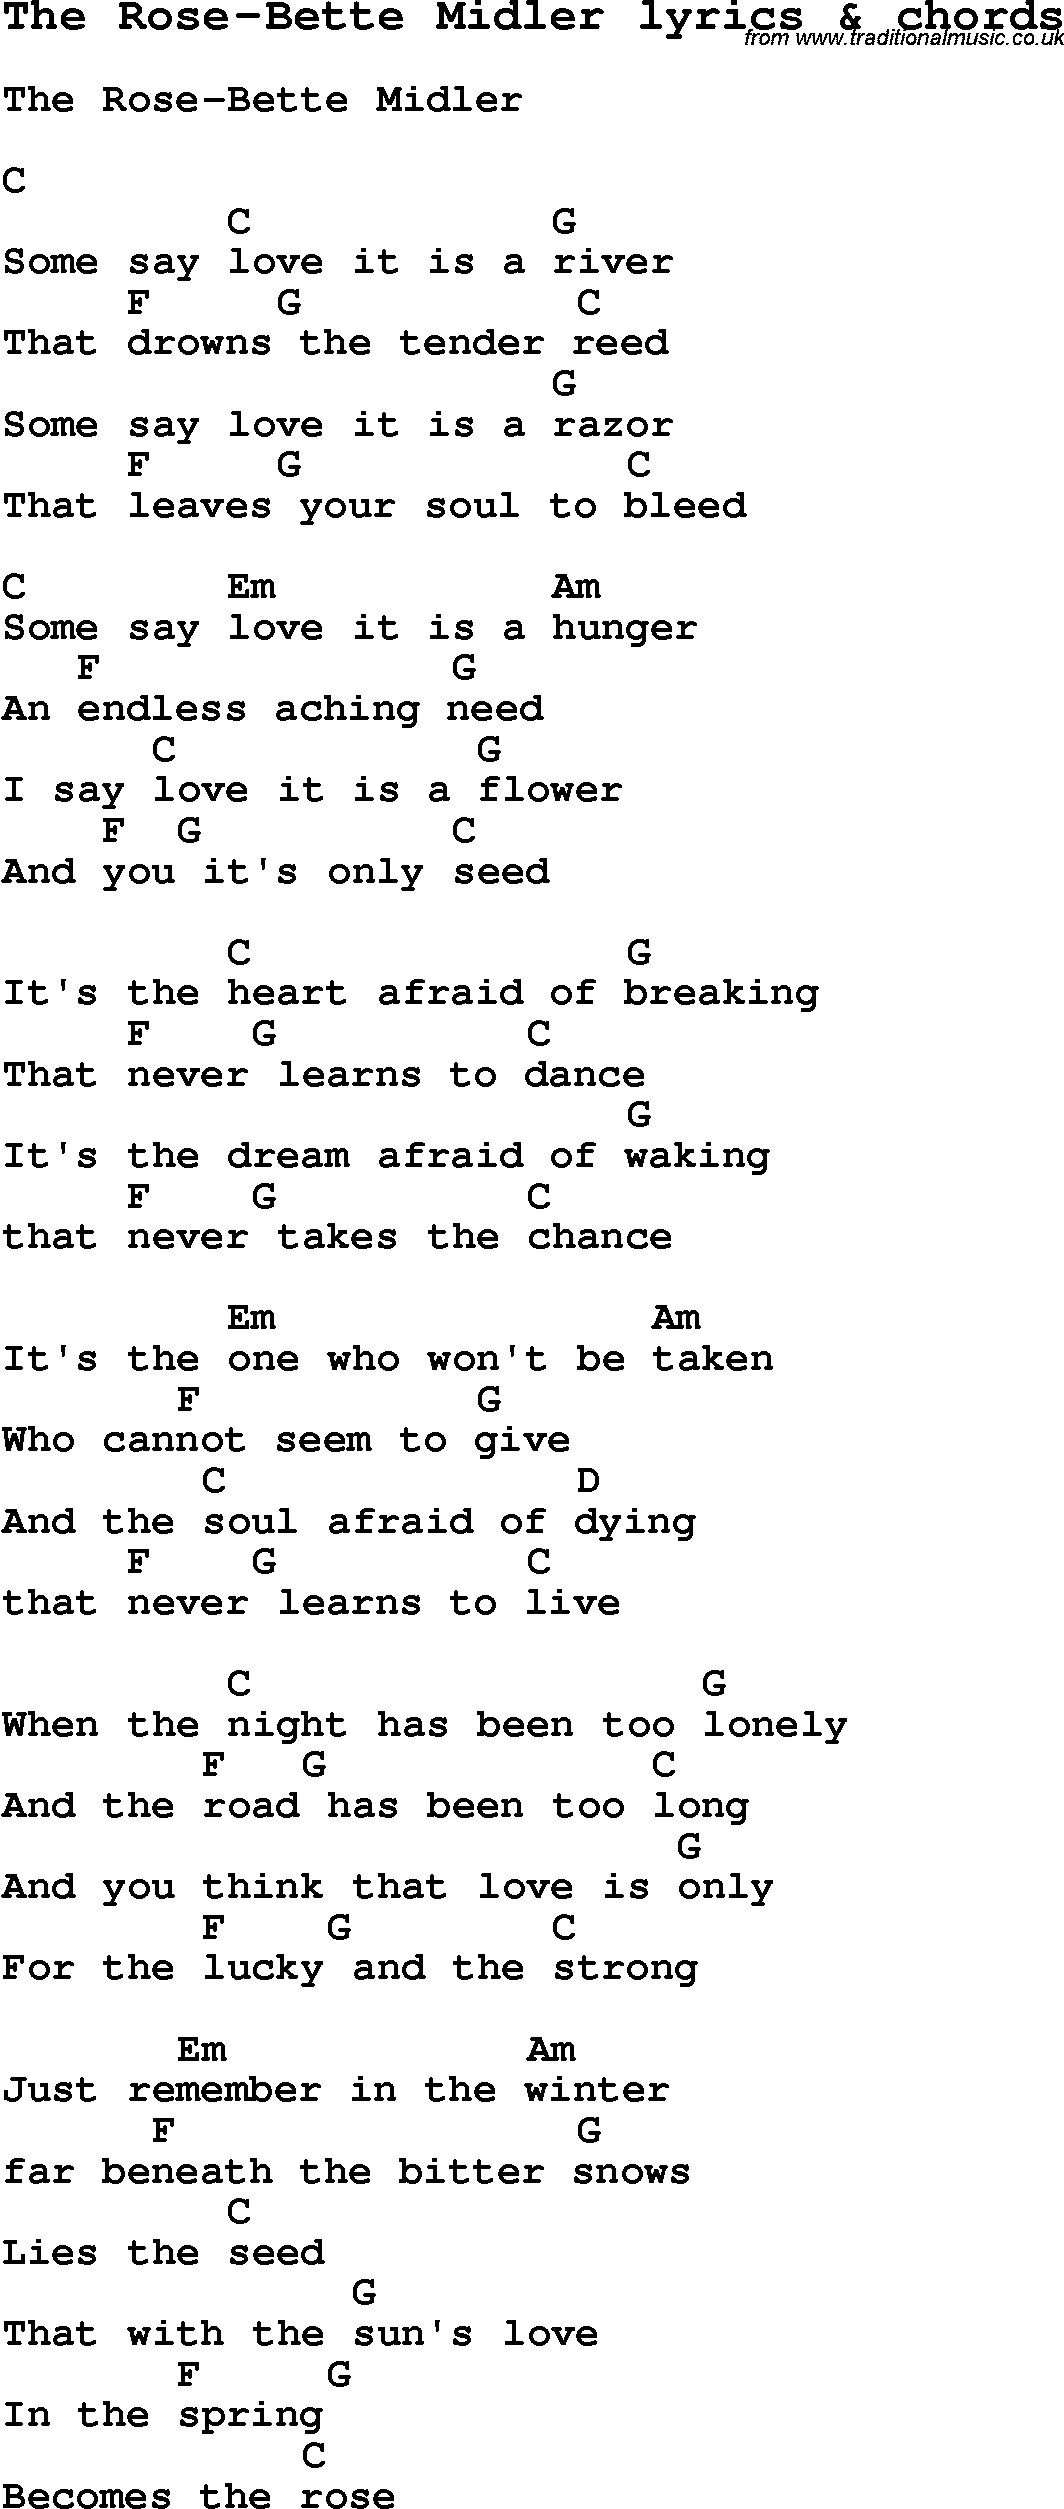 Love Song Lyrics for: The Rose-Bette Midler with chords for Ukulele, Guitar Banjo etc.